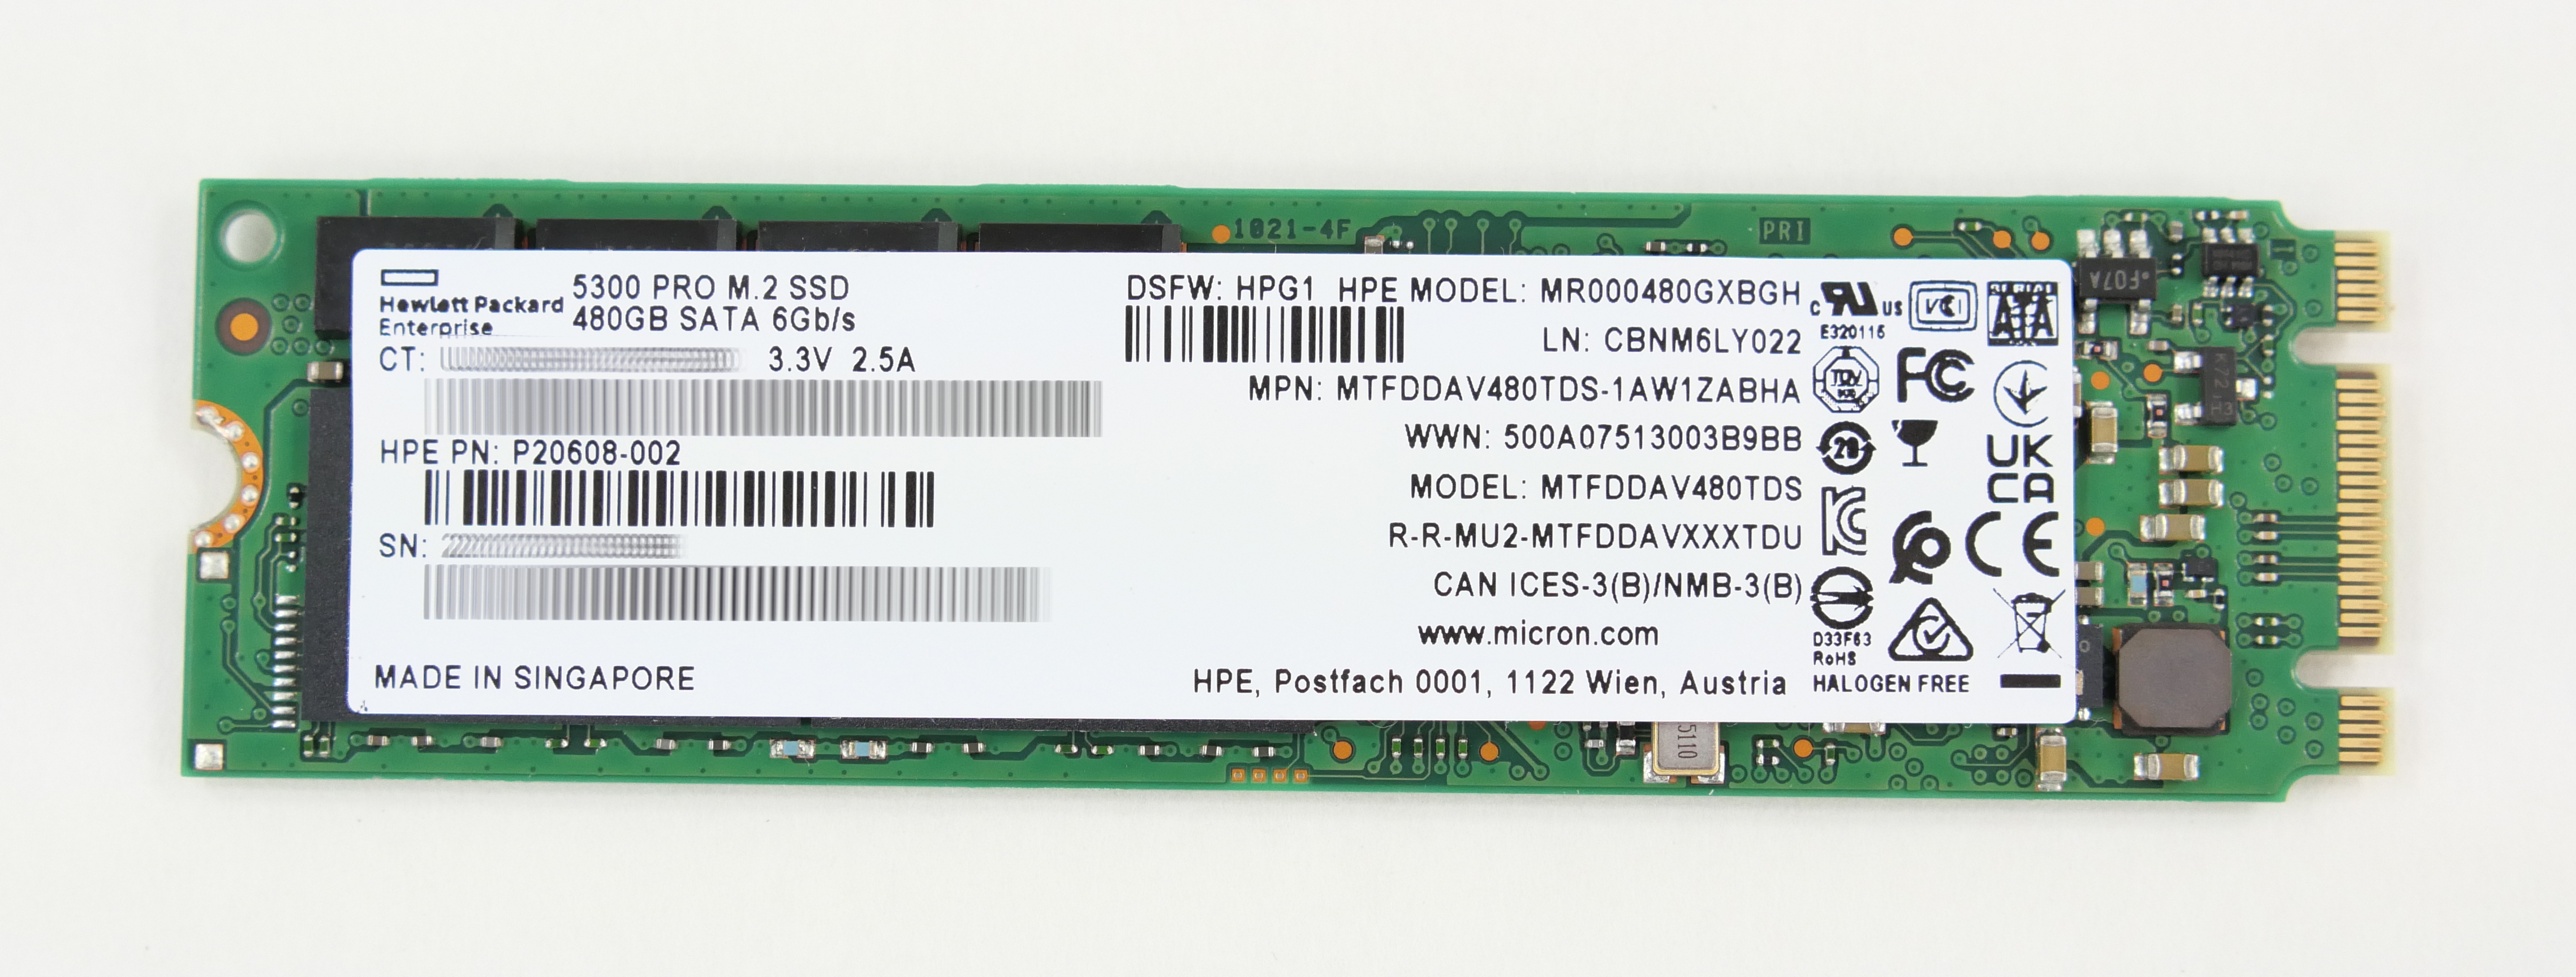 HP 5300 Pro 480GB SSD M.2 SATA 6GB/s MTFDDAV480TDS-1AW1ZABHA P20608-002